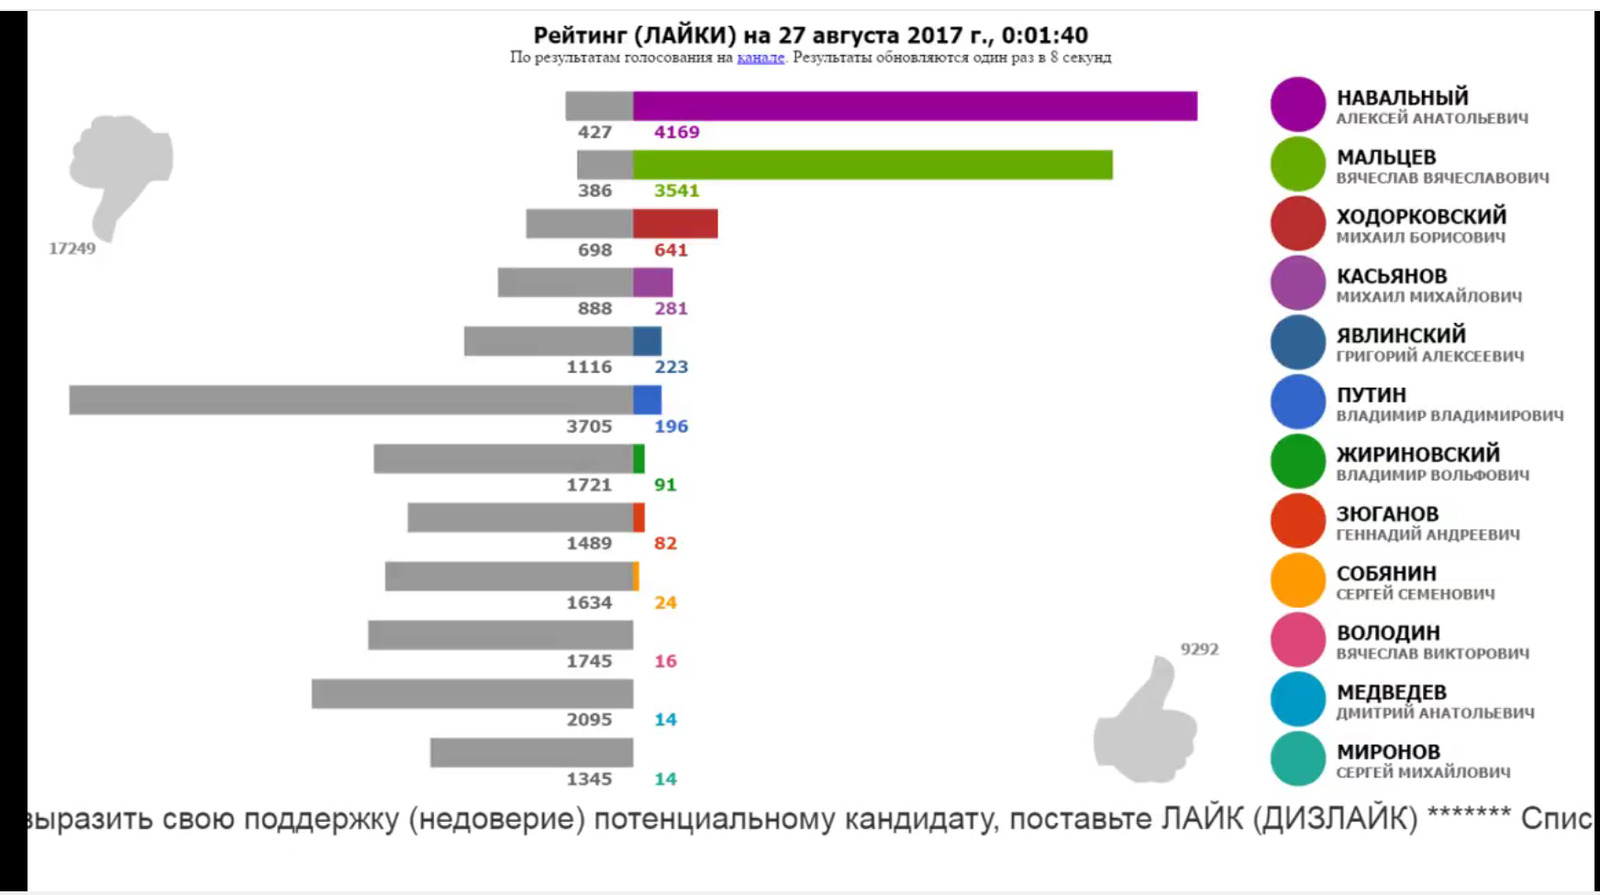 Vote on YOUTUBE for Russian presidential candidates in 2018 - Vote, Youtube, Politics, Alexey Navalny, Vladimir Putin, Like